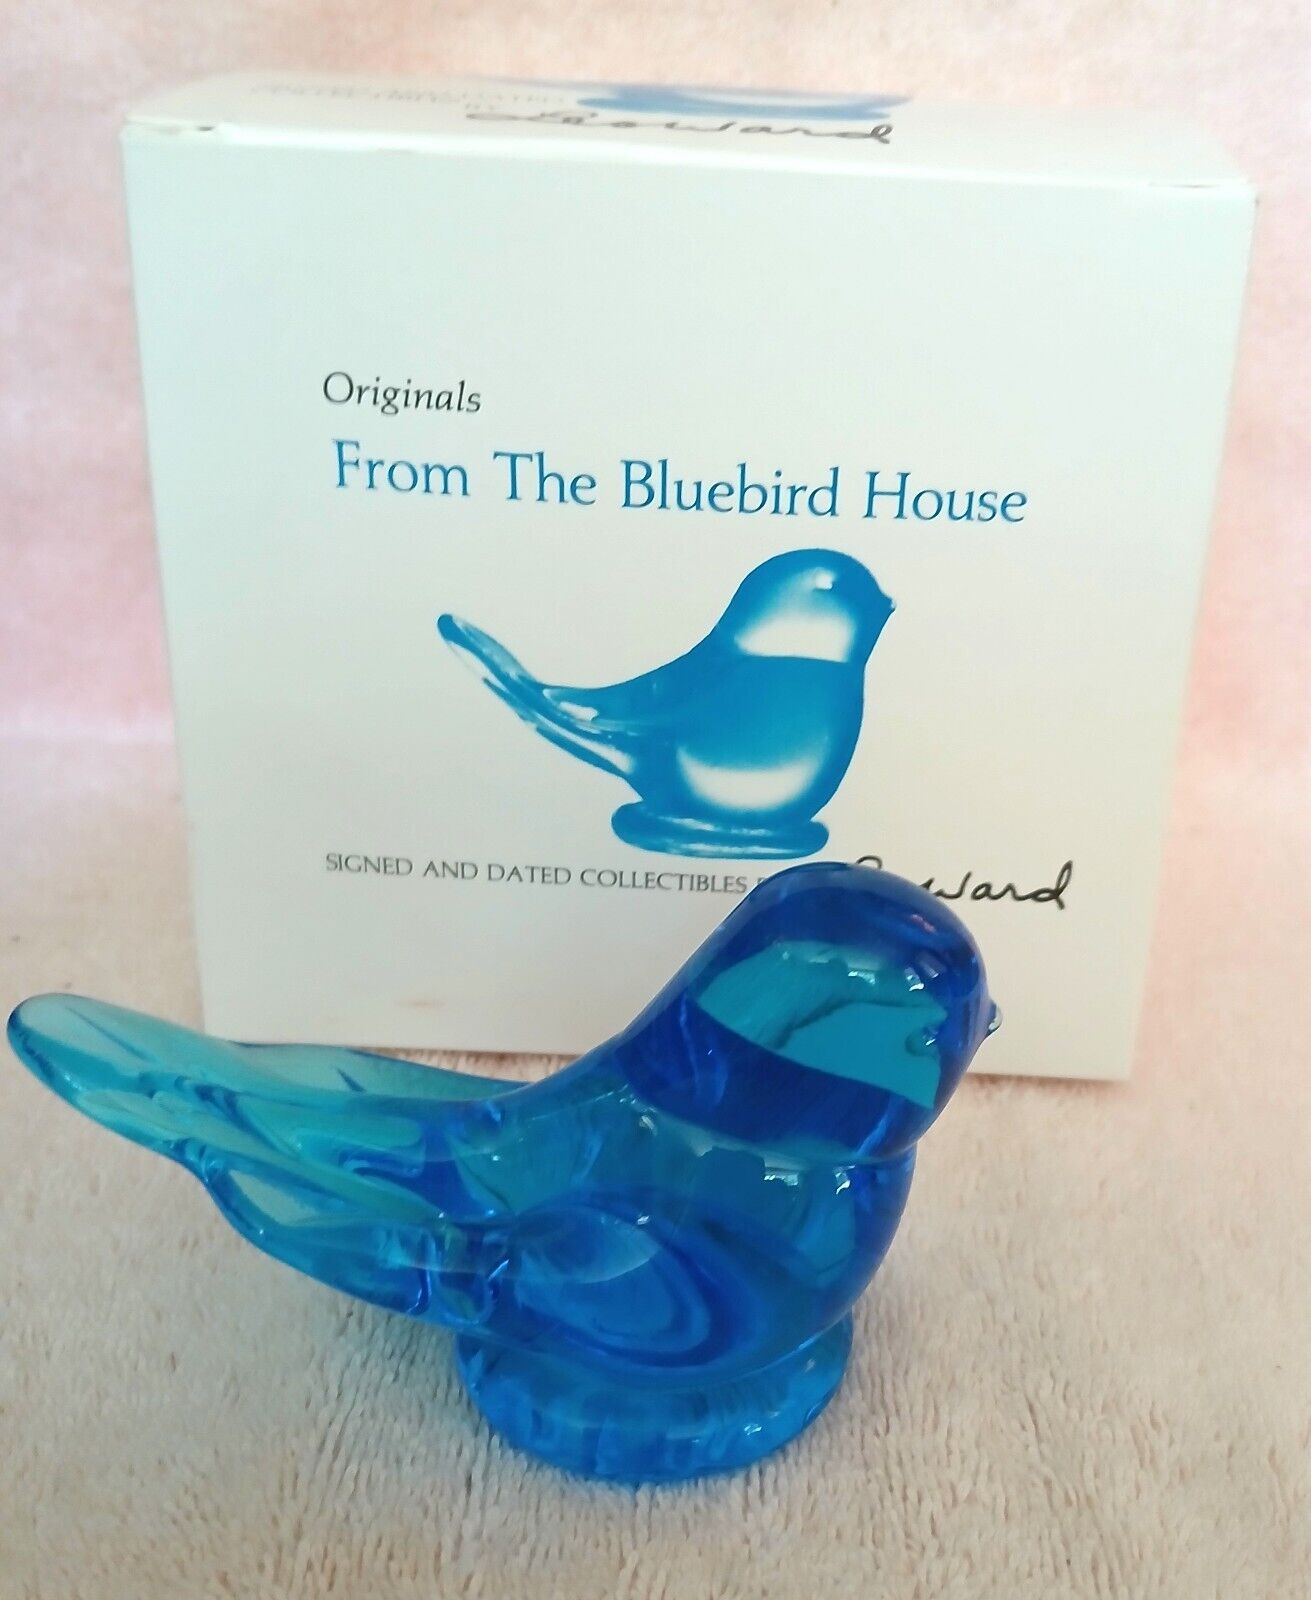 Originals From the Bluebird House by Leoward Signed & Dated Bluebird